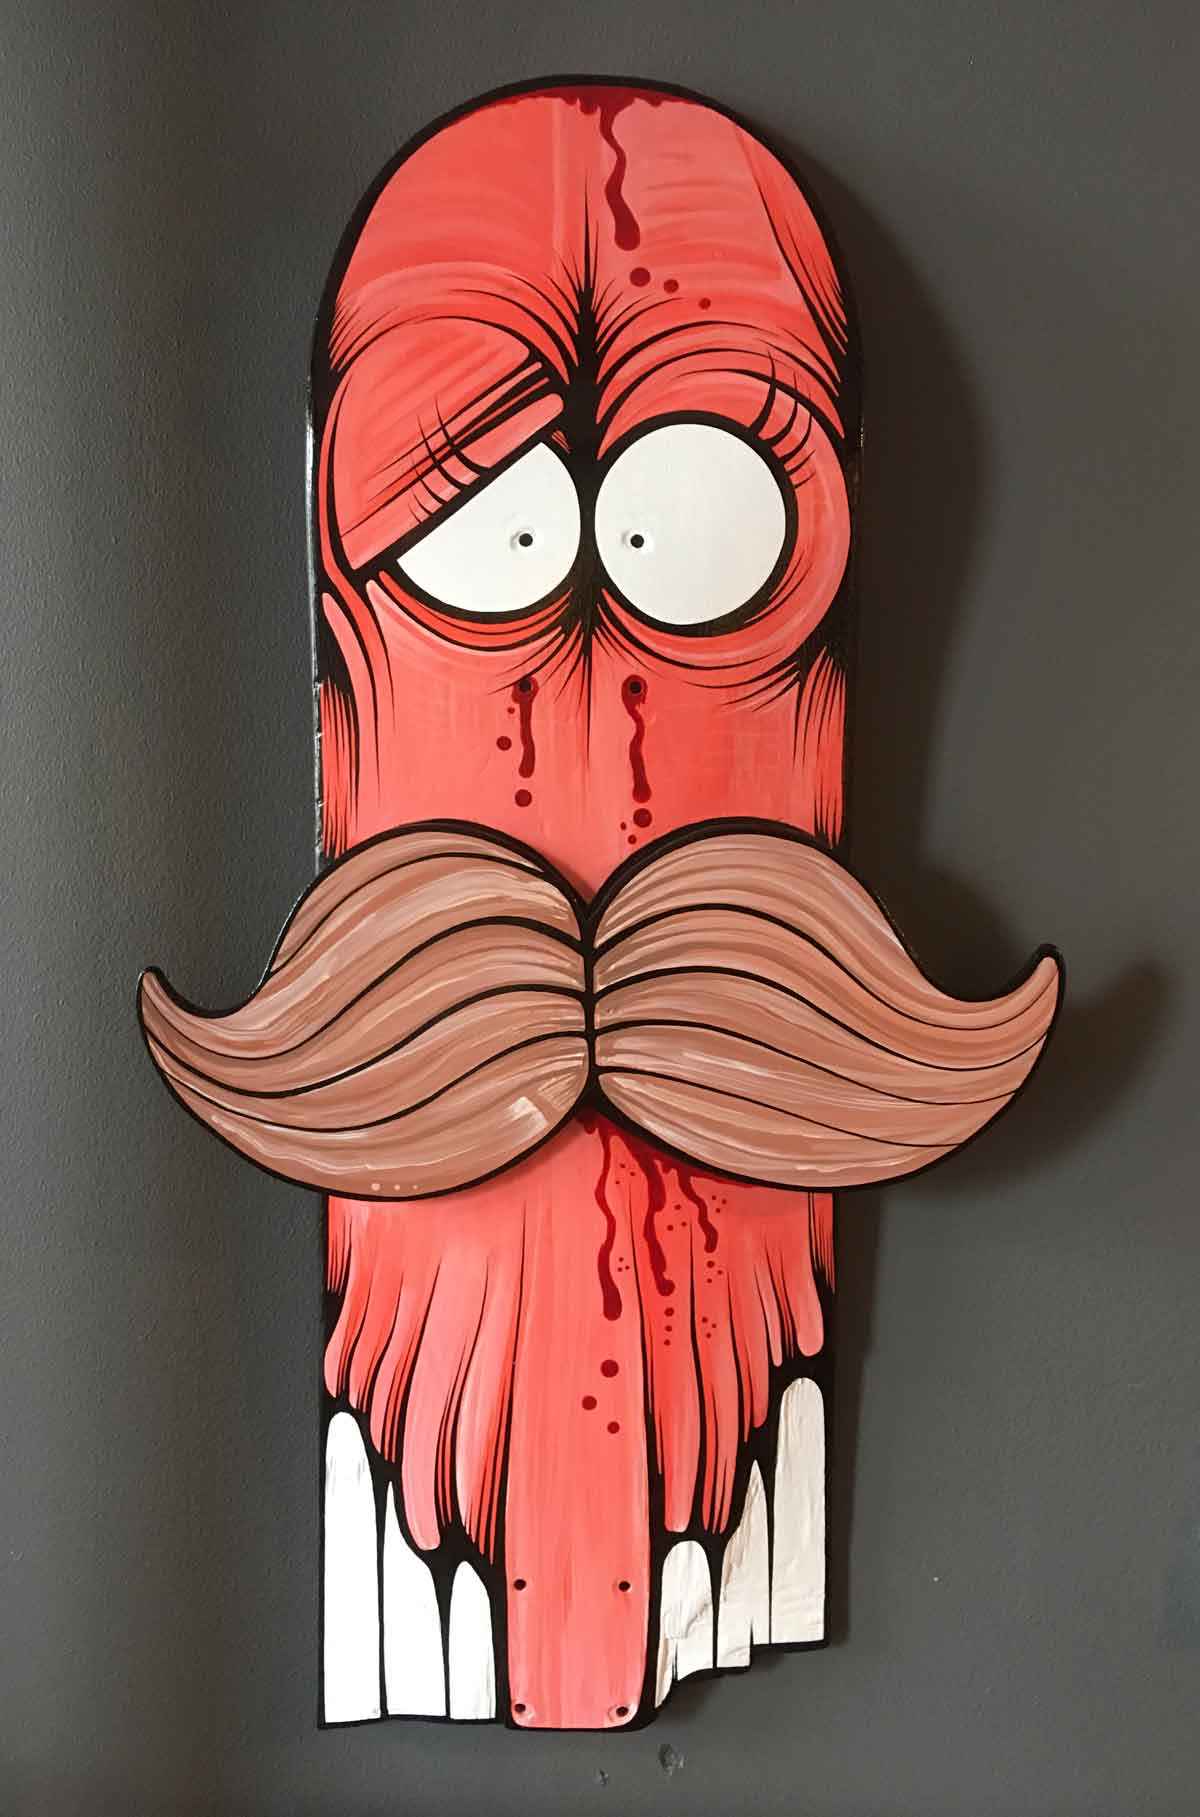 Moustache Man by   IMAMess... - Masterpiece Online